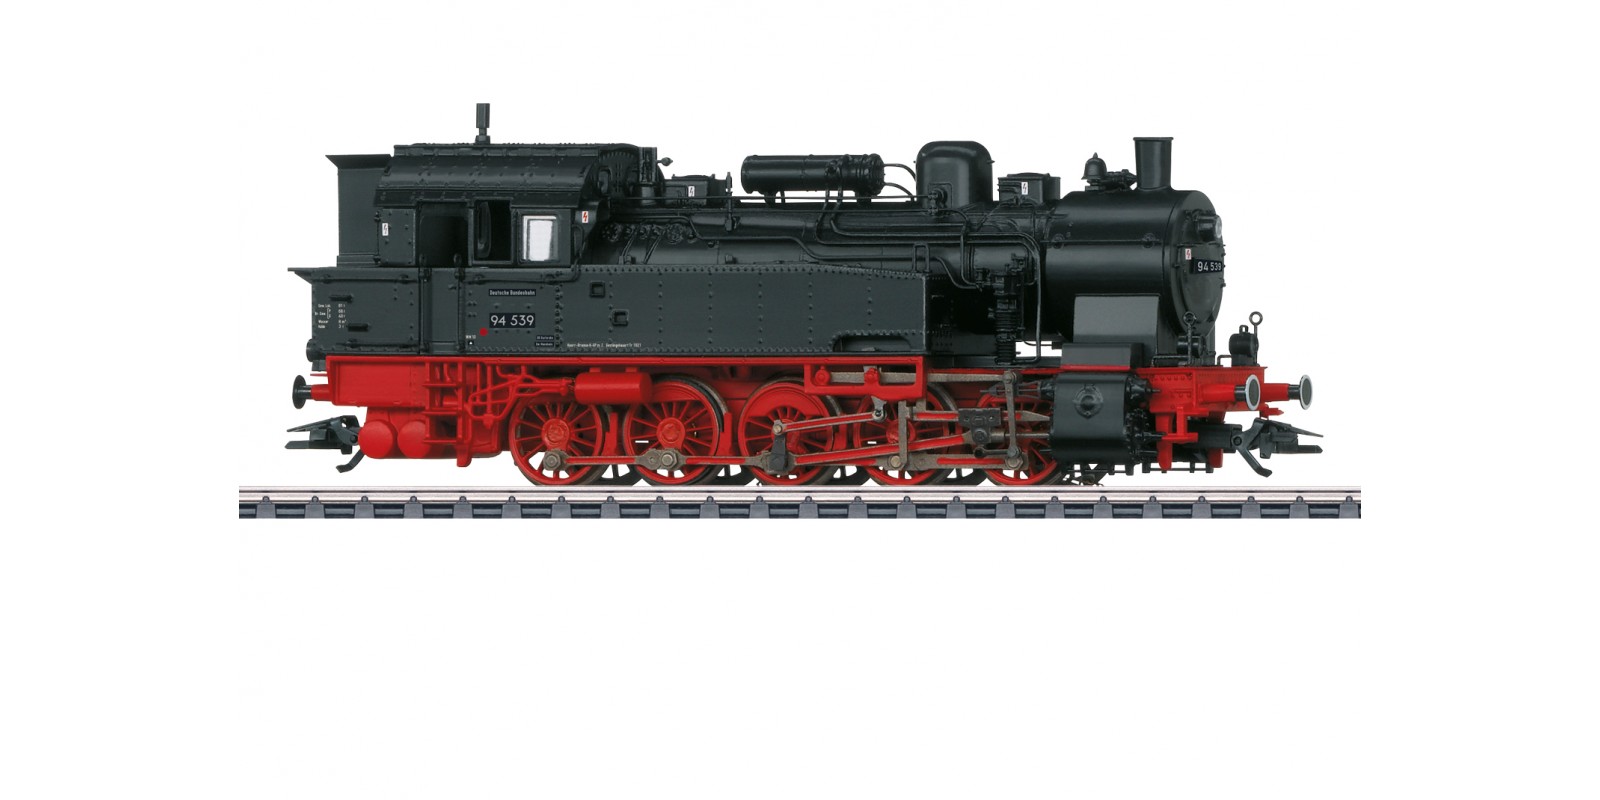 38940 Class 94.5-17 Steam Locomotive